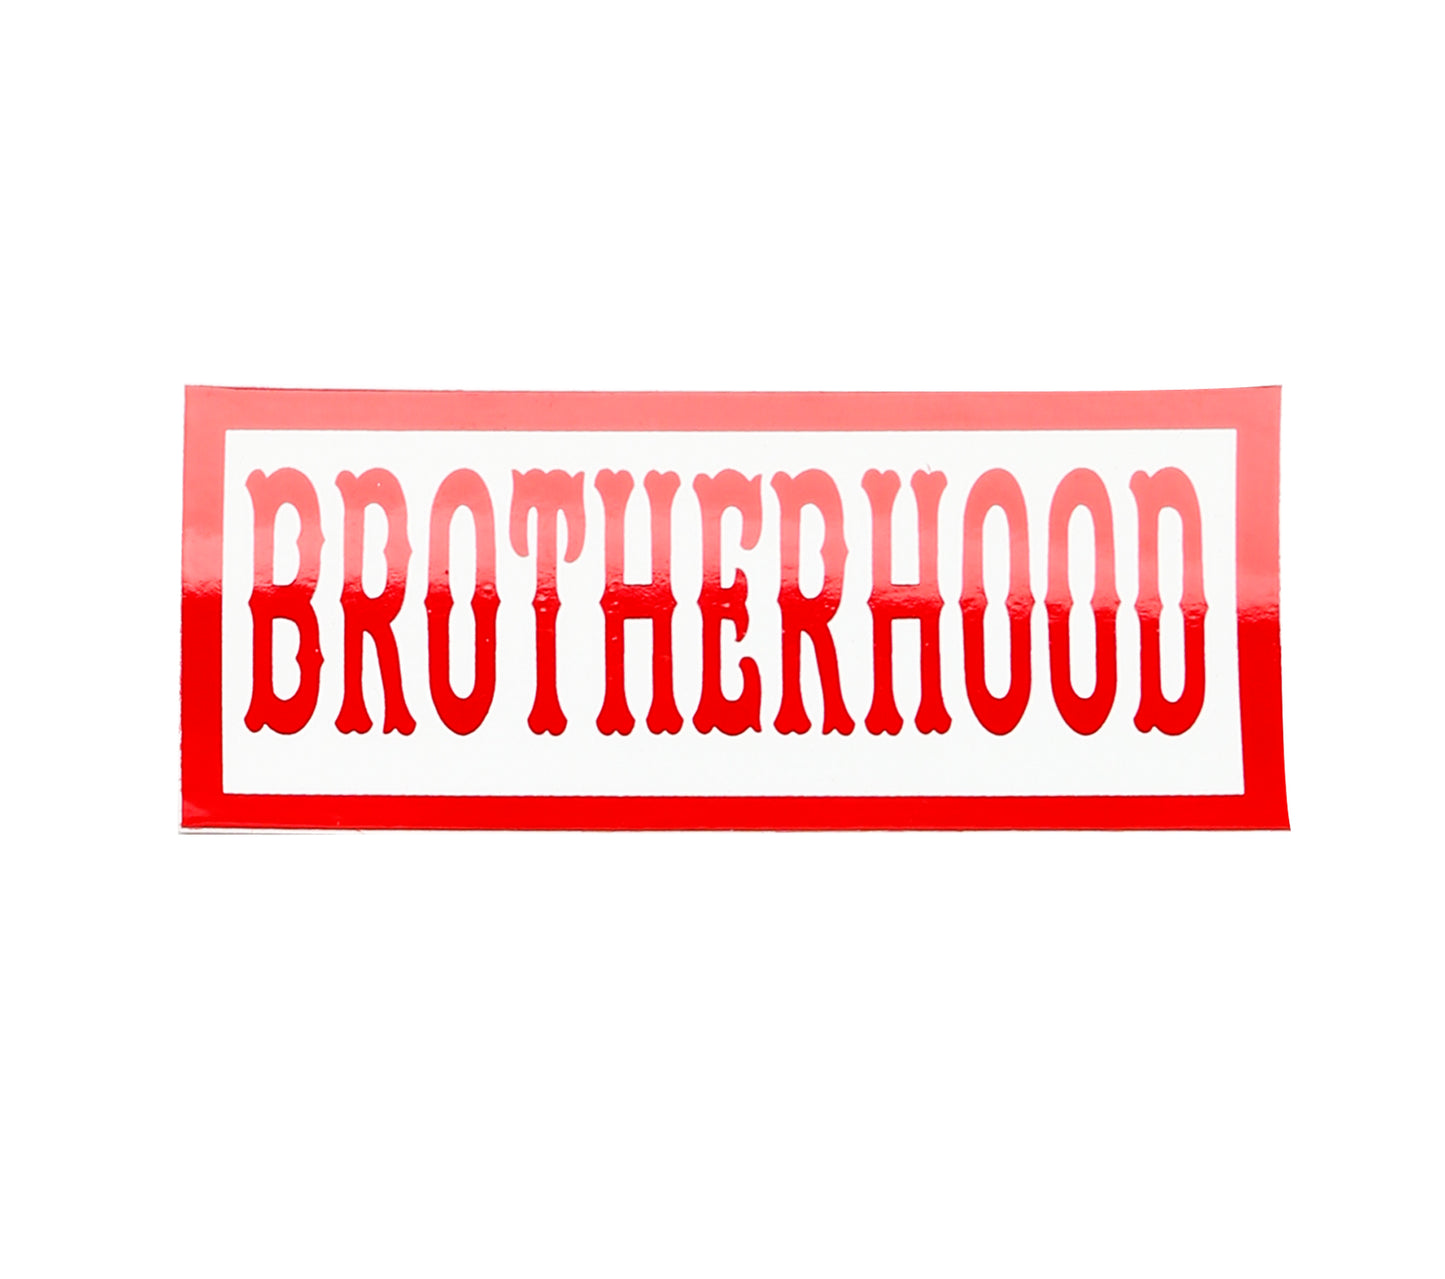 Sticker - BROTHERHOOD